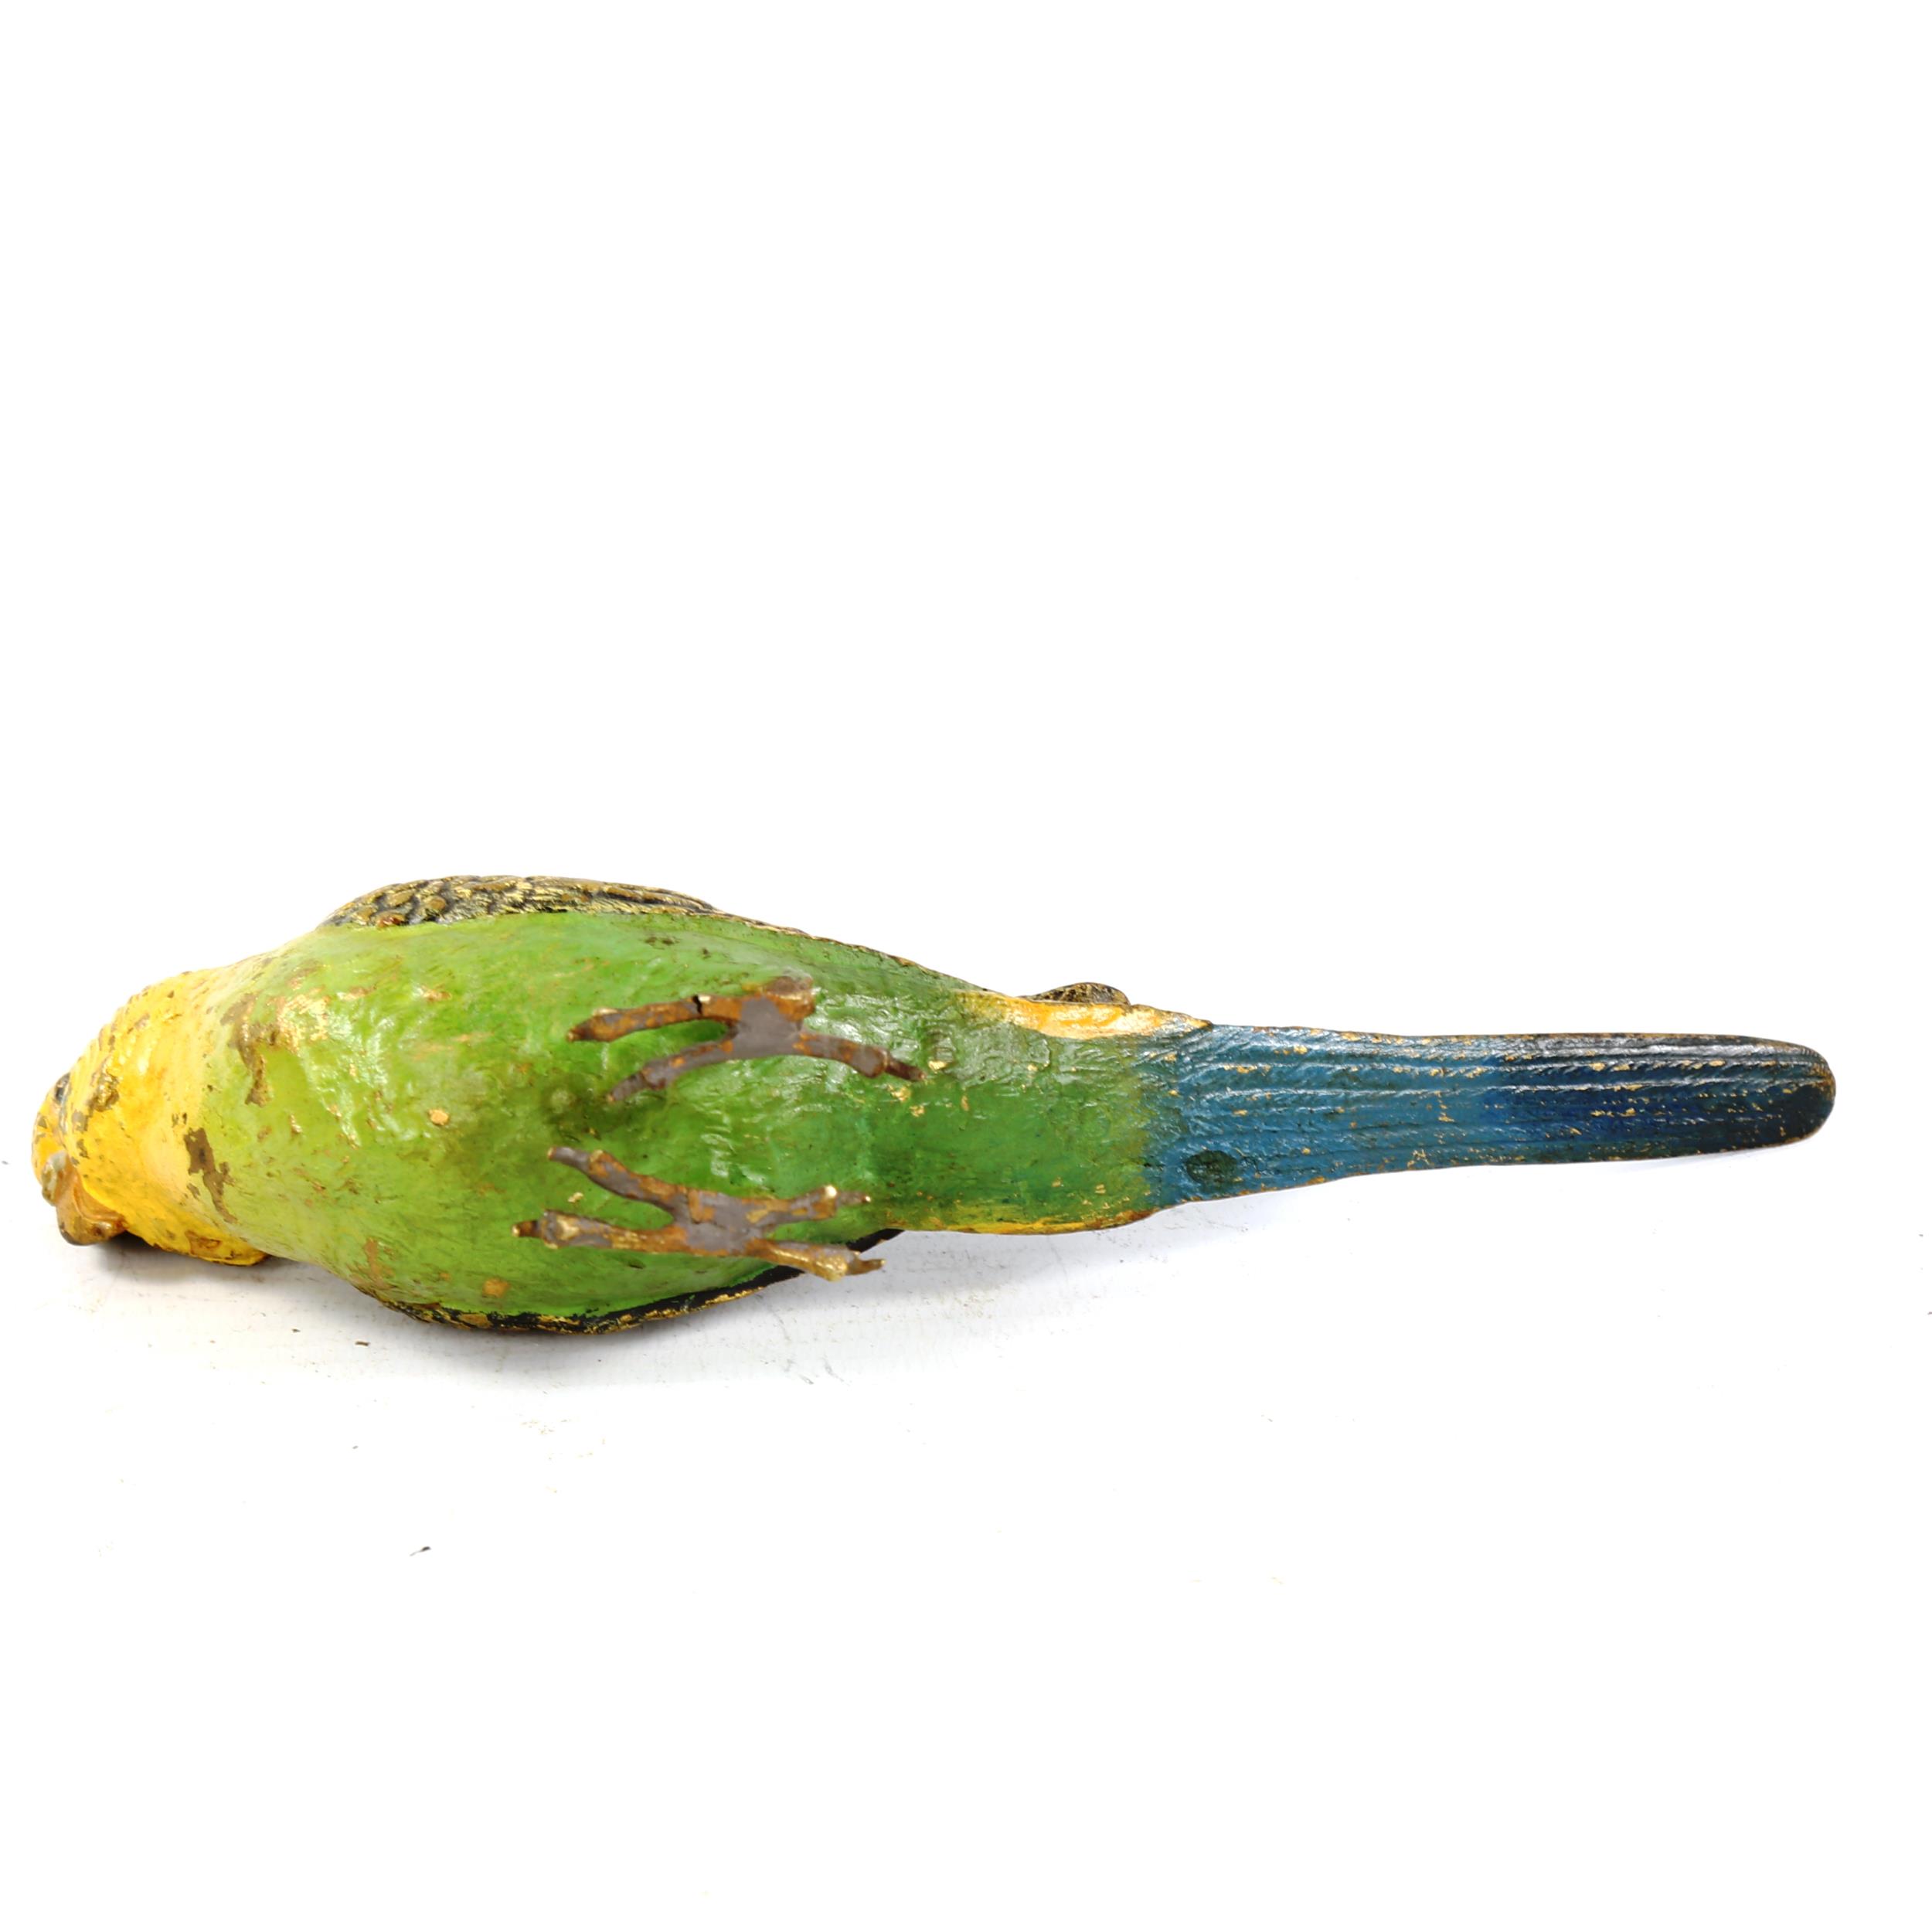 Austrian cold painted bronze parakeet, length 16cm - Image 3 of 3